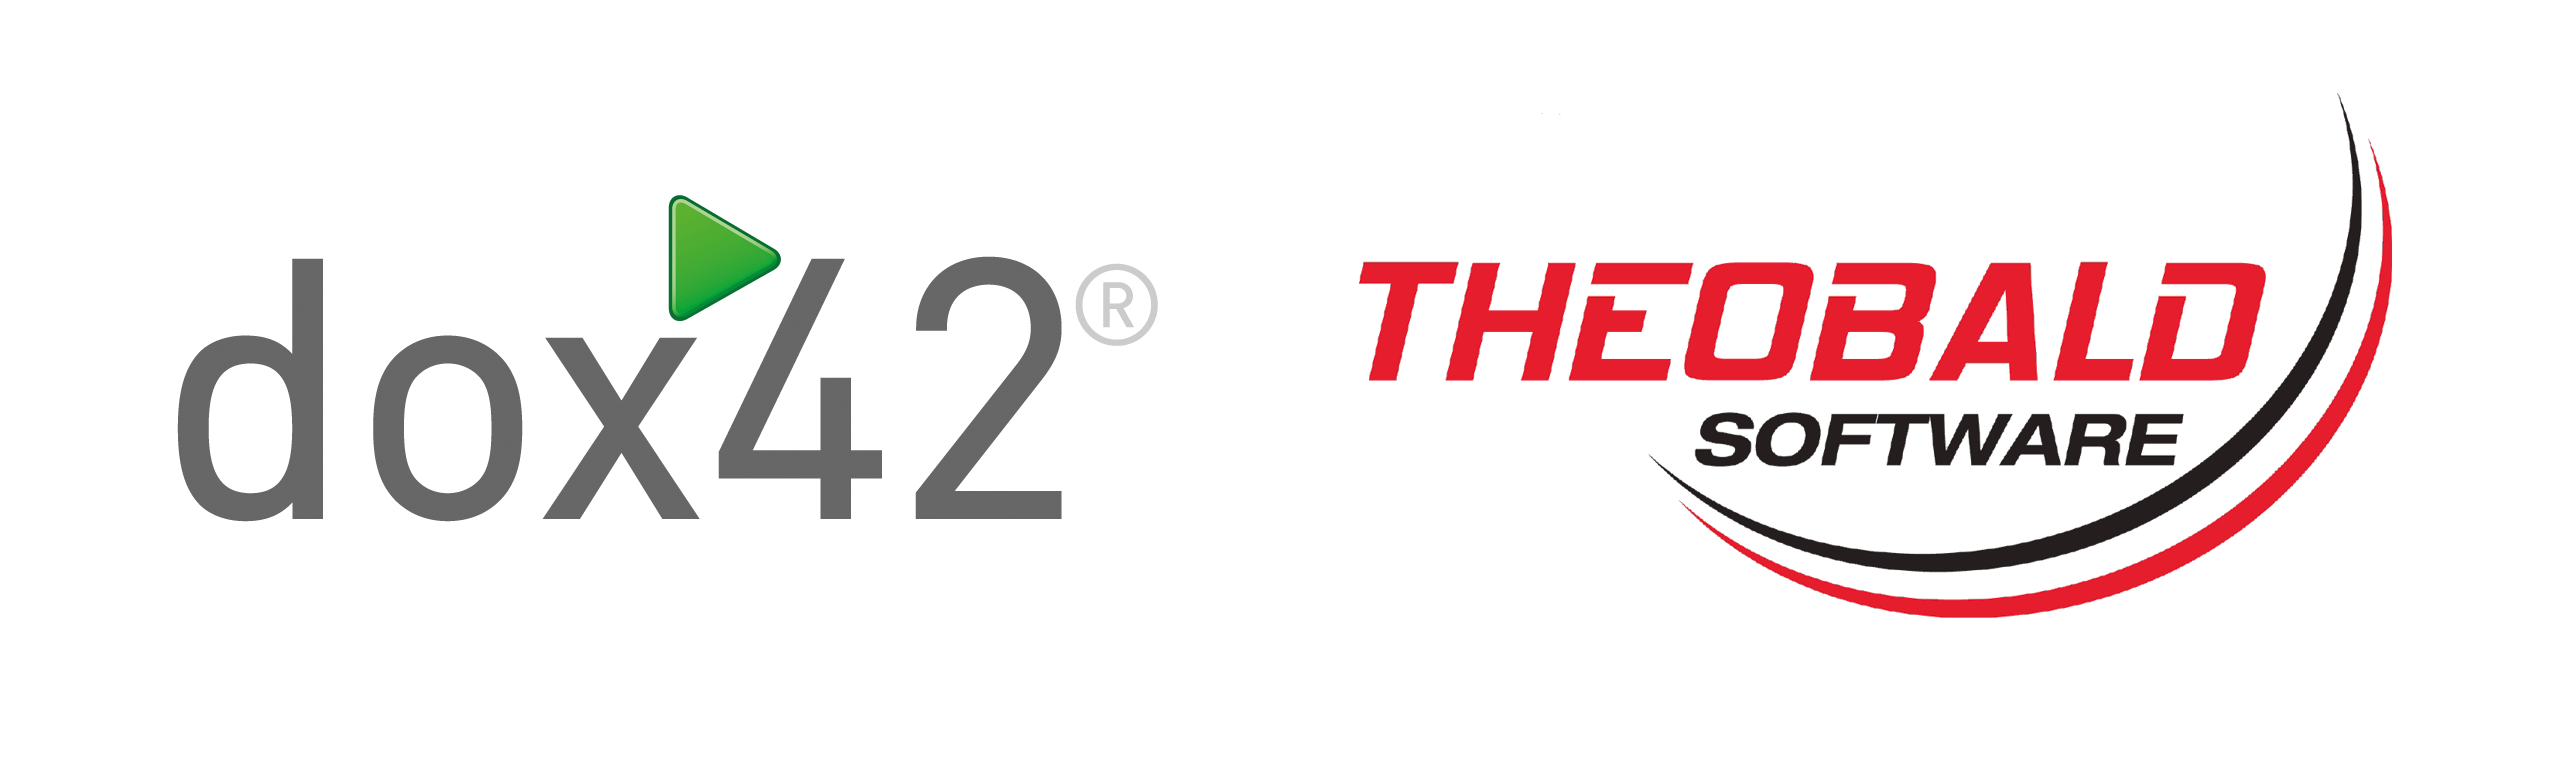 Logos dox42 Theobald Software